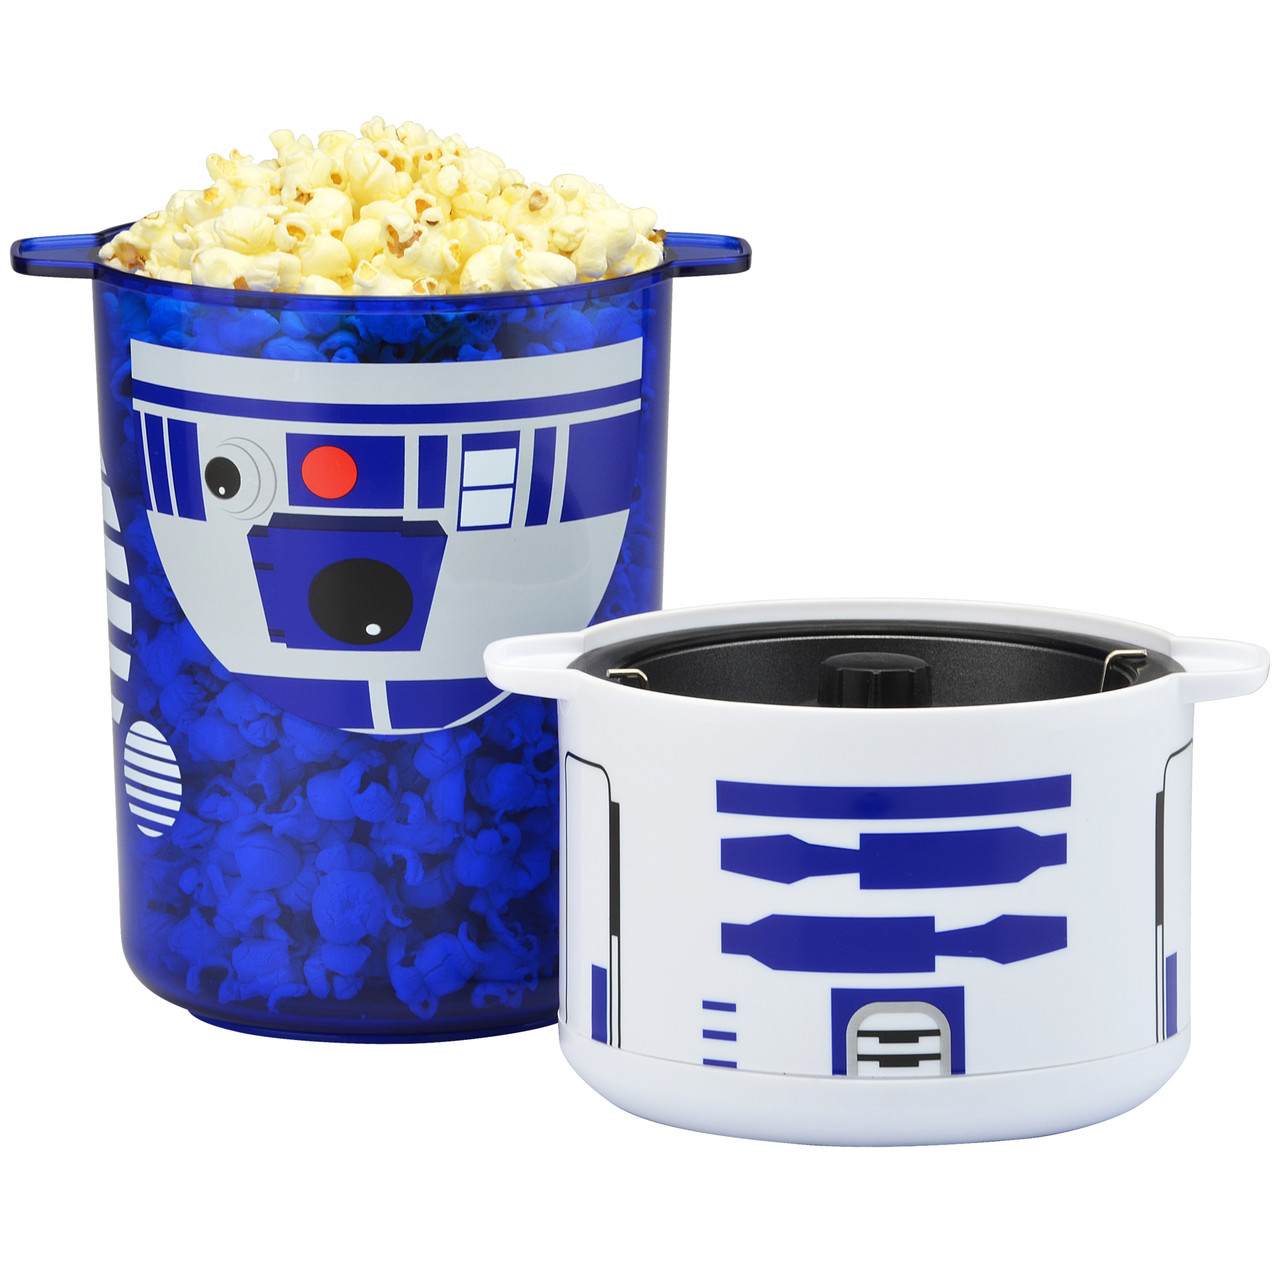 Uncanny Brands Star Wars R2D2 Hot Air Popcorn Maker 